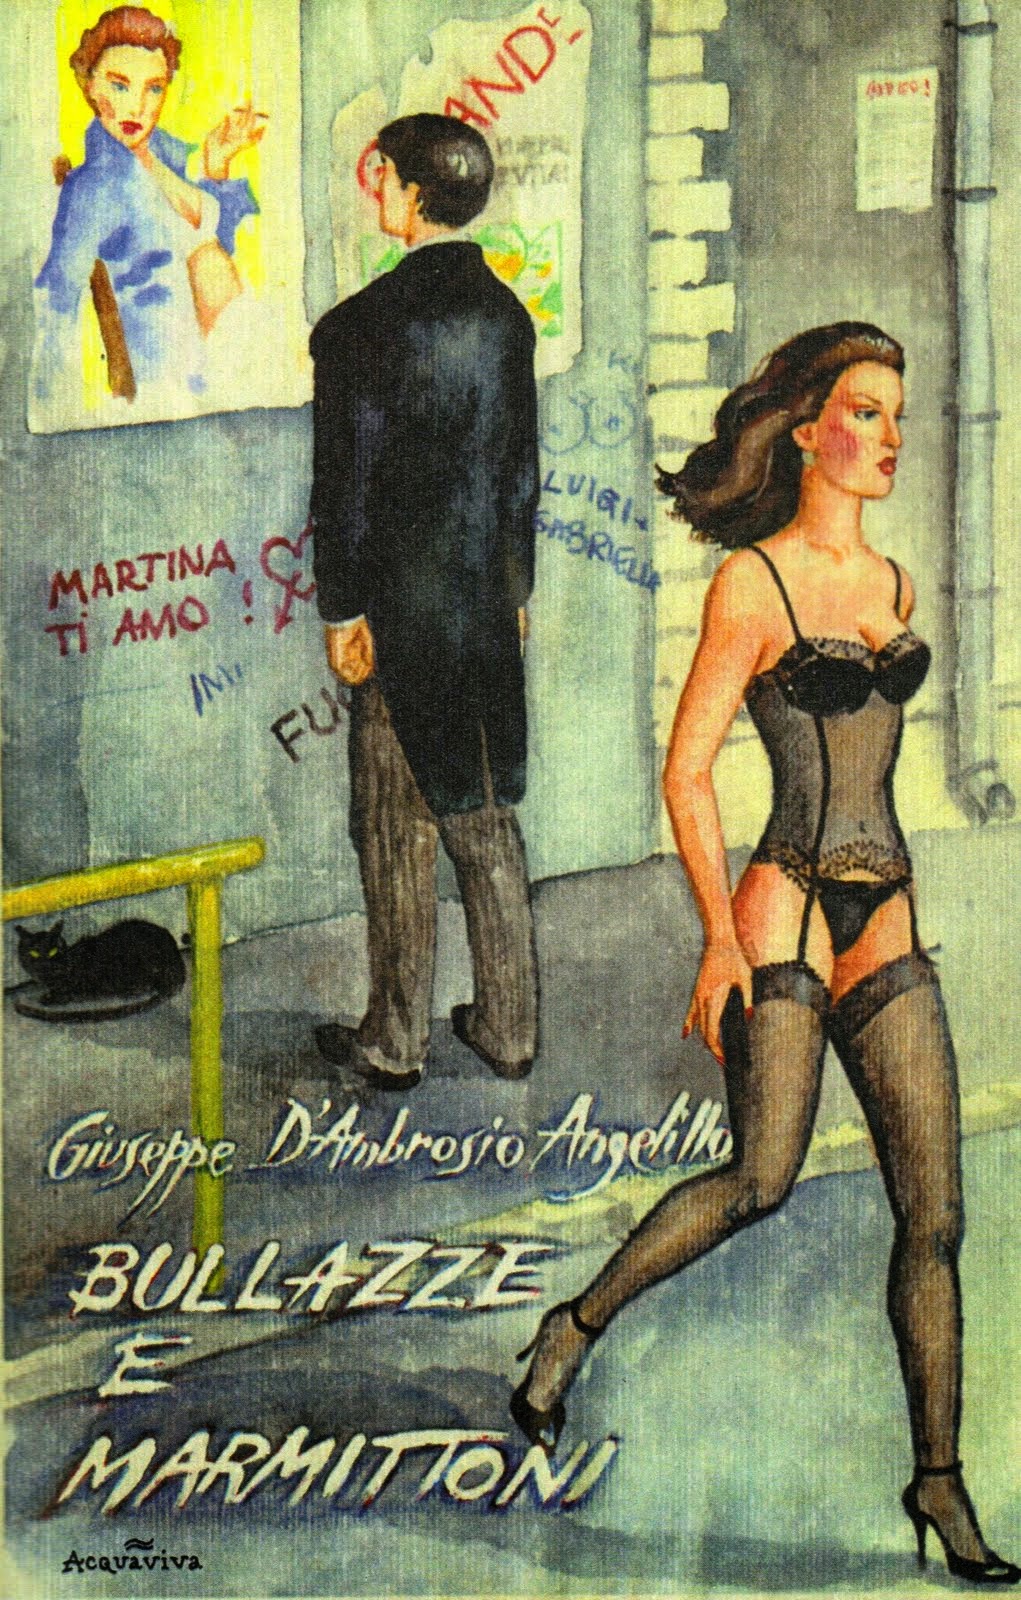 BULLAZZE E MARMITTONI on www.books.google.com